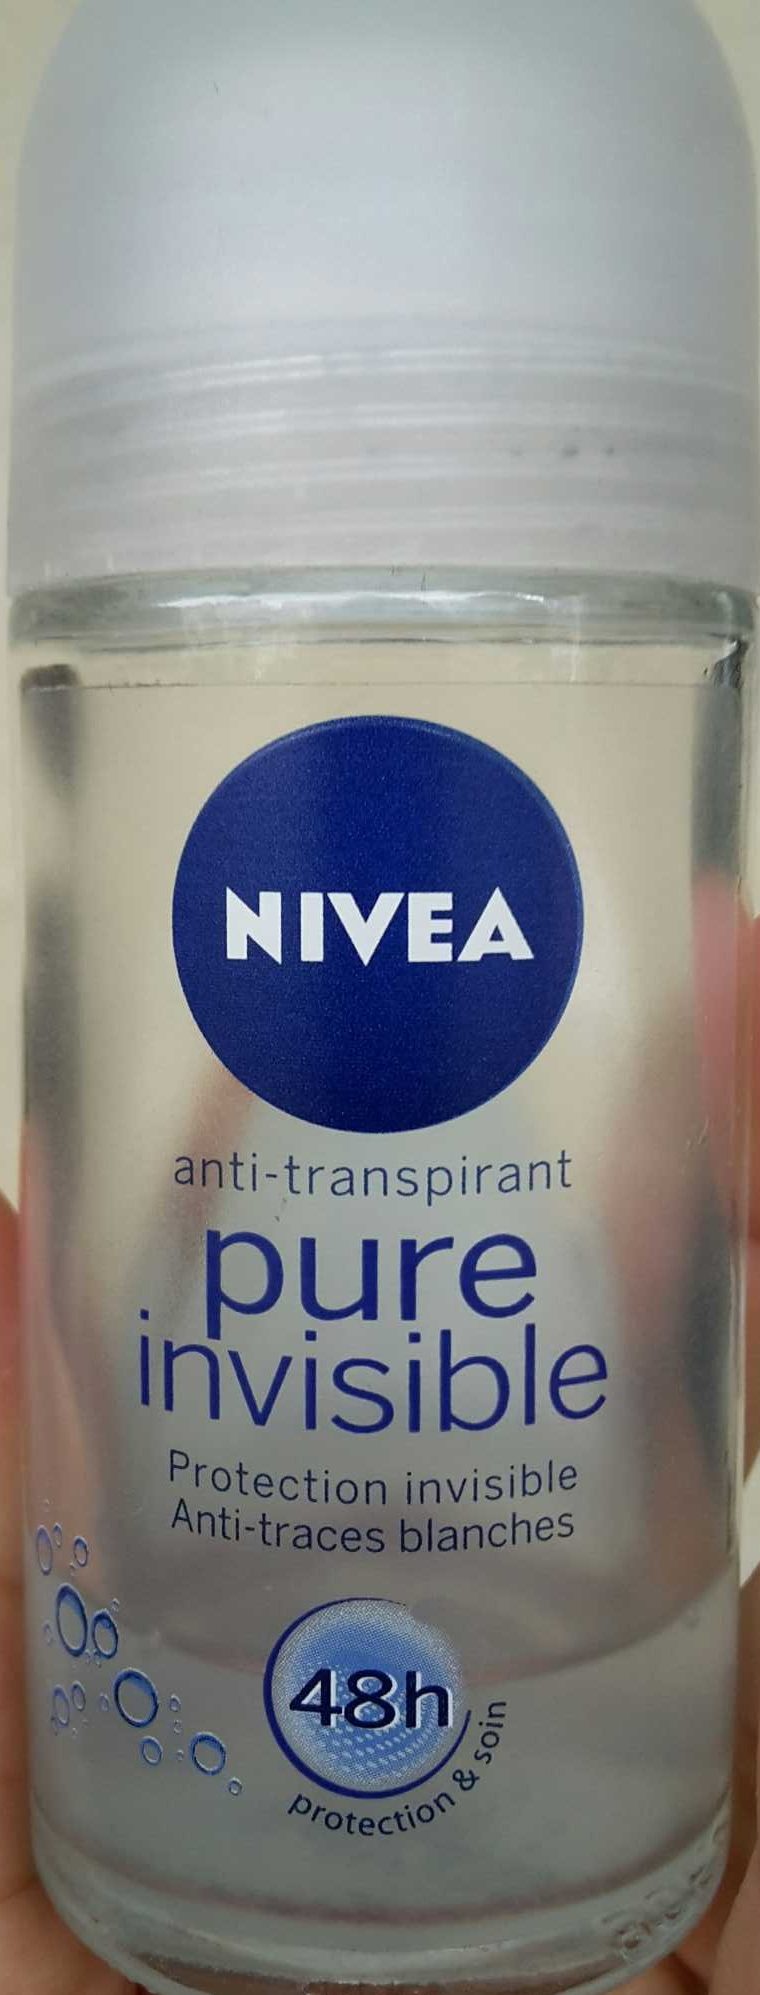 Anti-transpirant pure invisible - Produit - fr